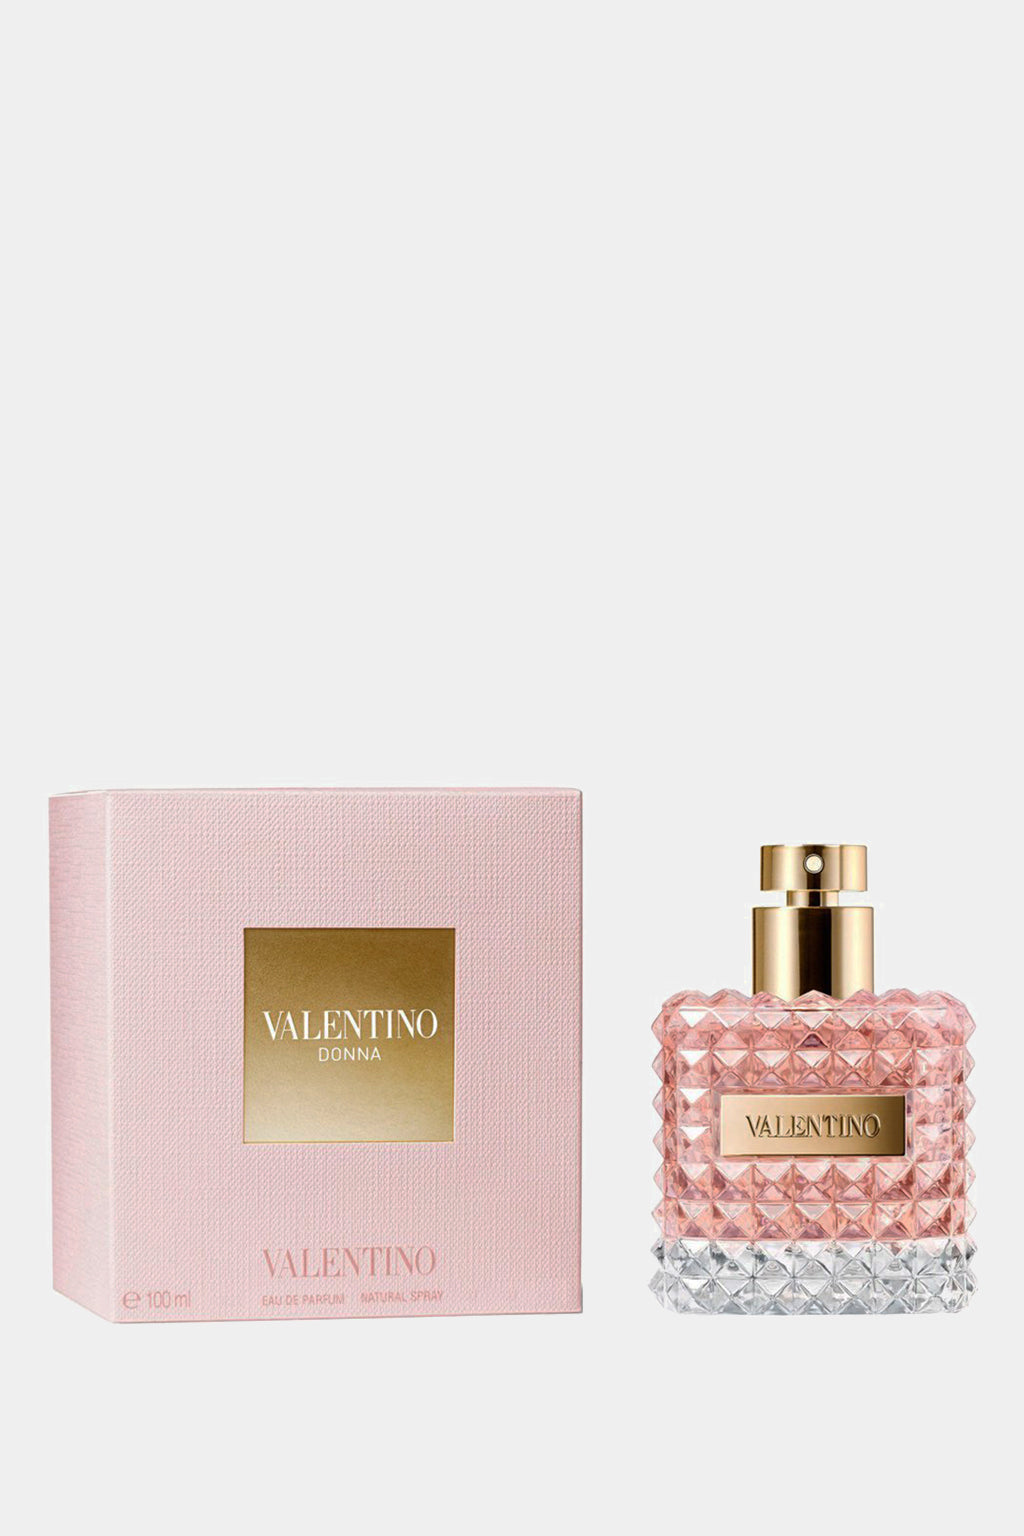 Valentino - Donna Eau de Parfum